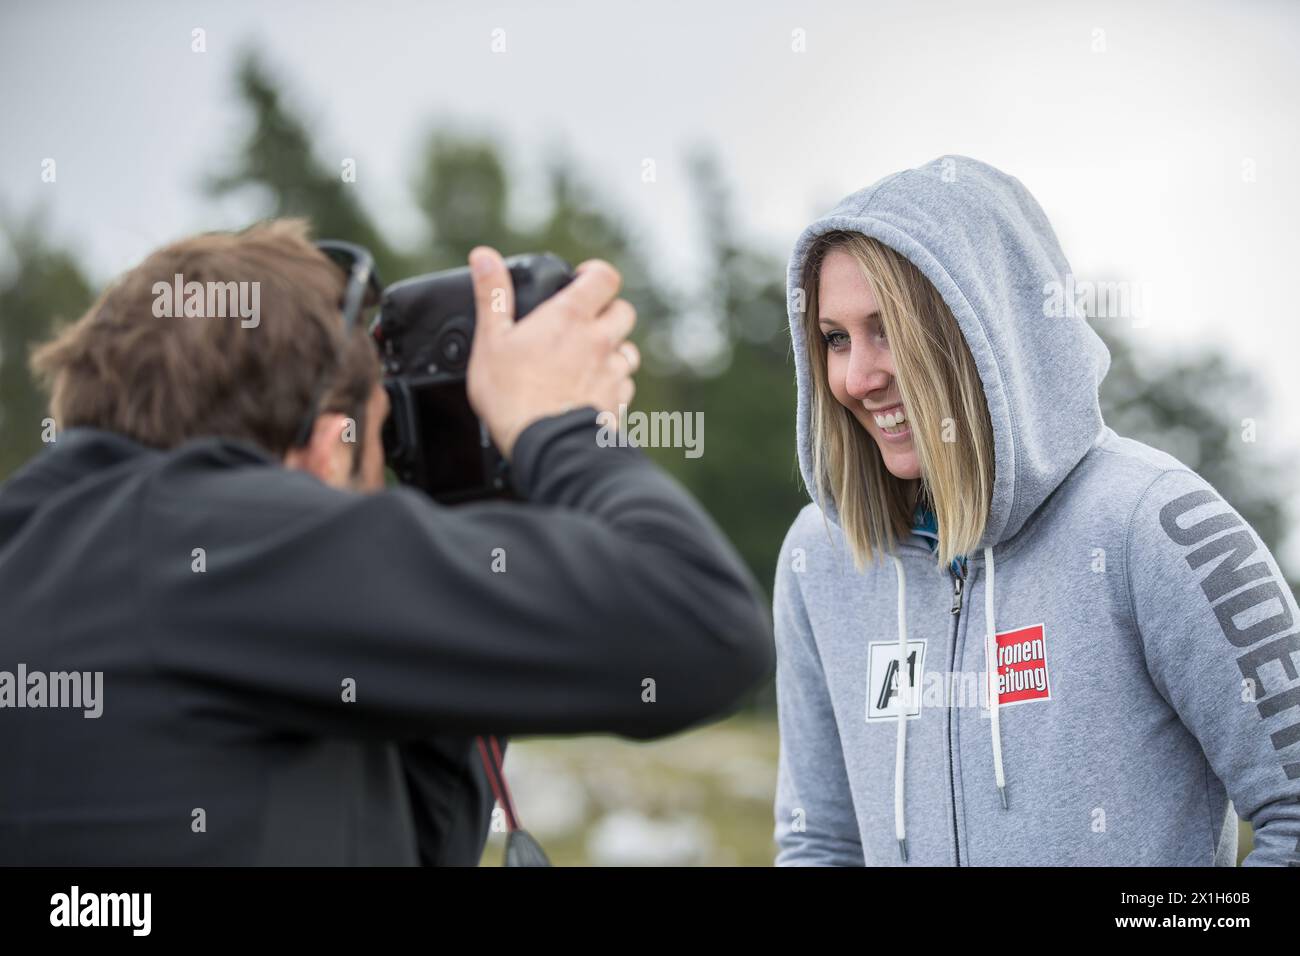 The Austrian skier Cornelia Hütter, poses during a photo shoot at St. Redegund on Schöckl near Graz, Austria, on 26 th September 2016. PICTURE: Cornelia Hütter - 20160926 PD2200 - Rechteinfo: Rights Managed (RM) Stock Photo